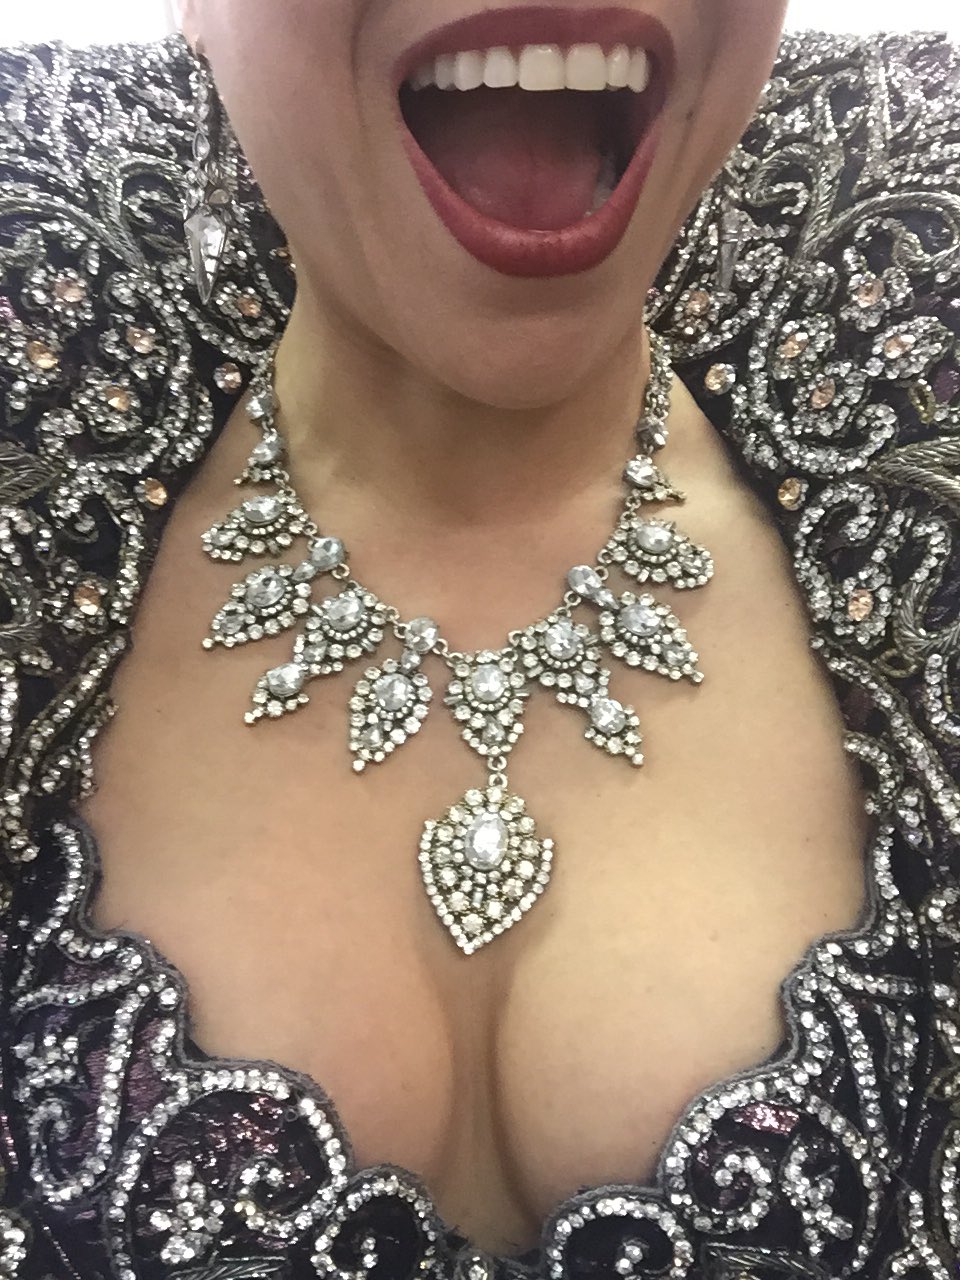 Lana parrilla boobs